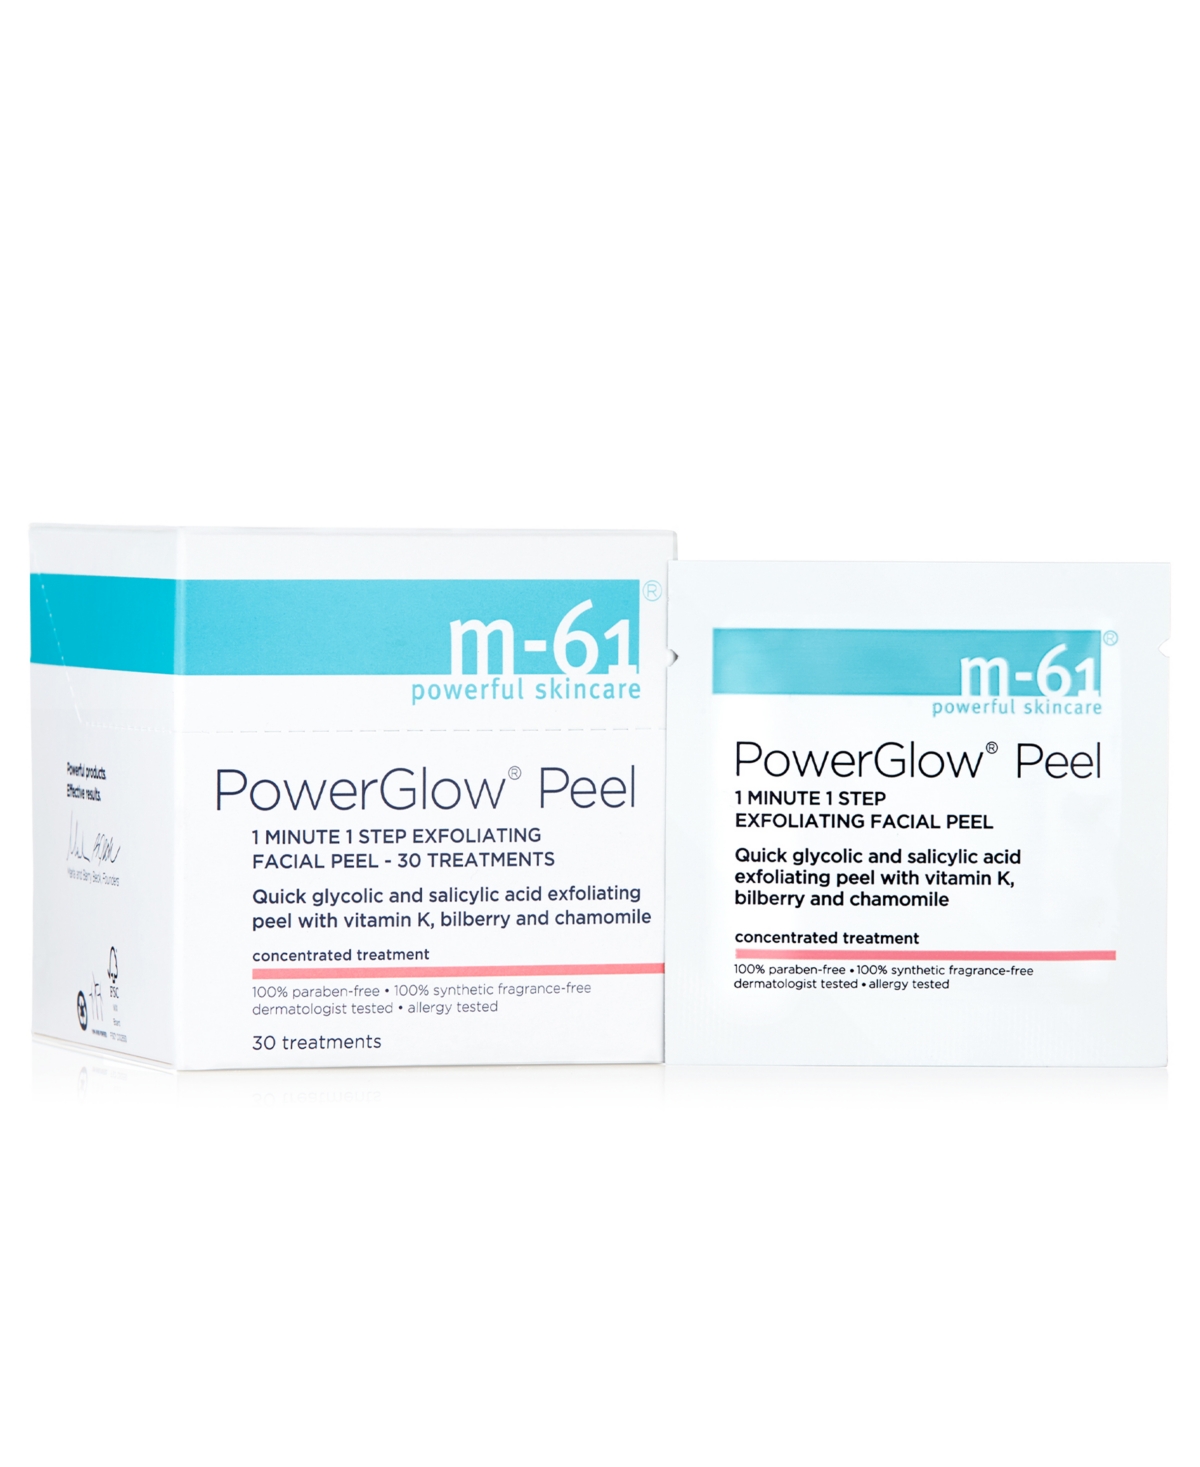 m-61 by Bluemercury PowerGlow Peel 1 Minute 1-Step Exfoliating Facial Peel - 30 Treatments